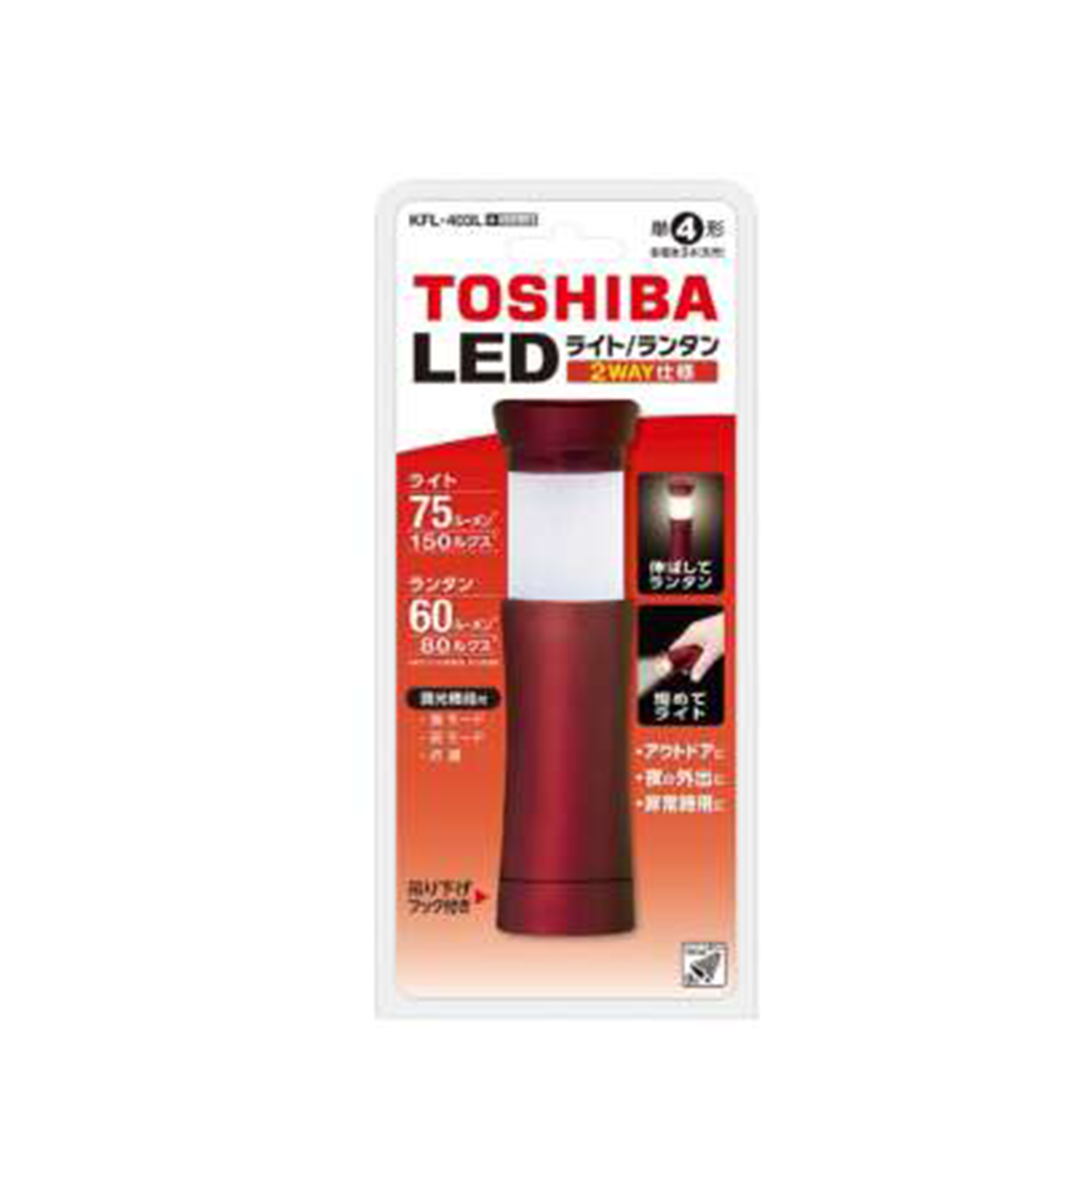 Toshiba Red 2-way Flash & Lantern, KFL-403L(R)